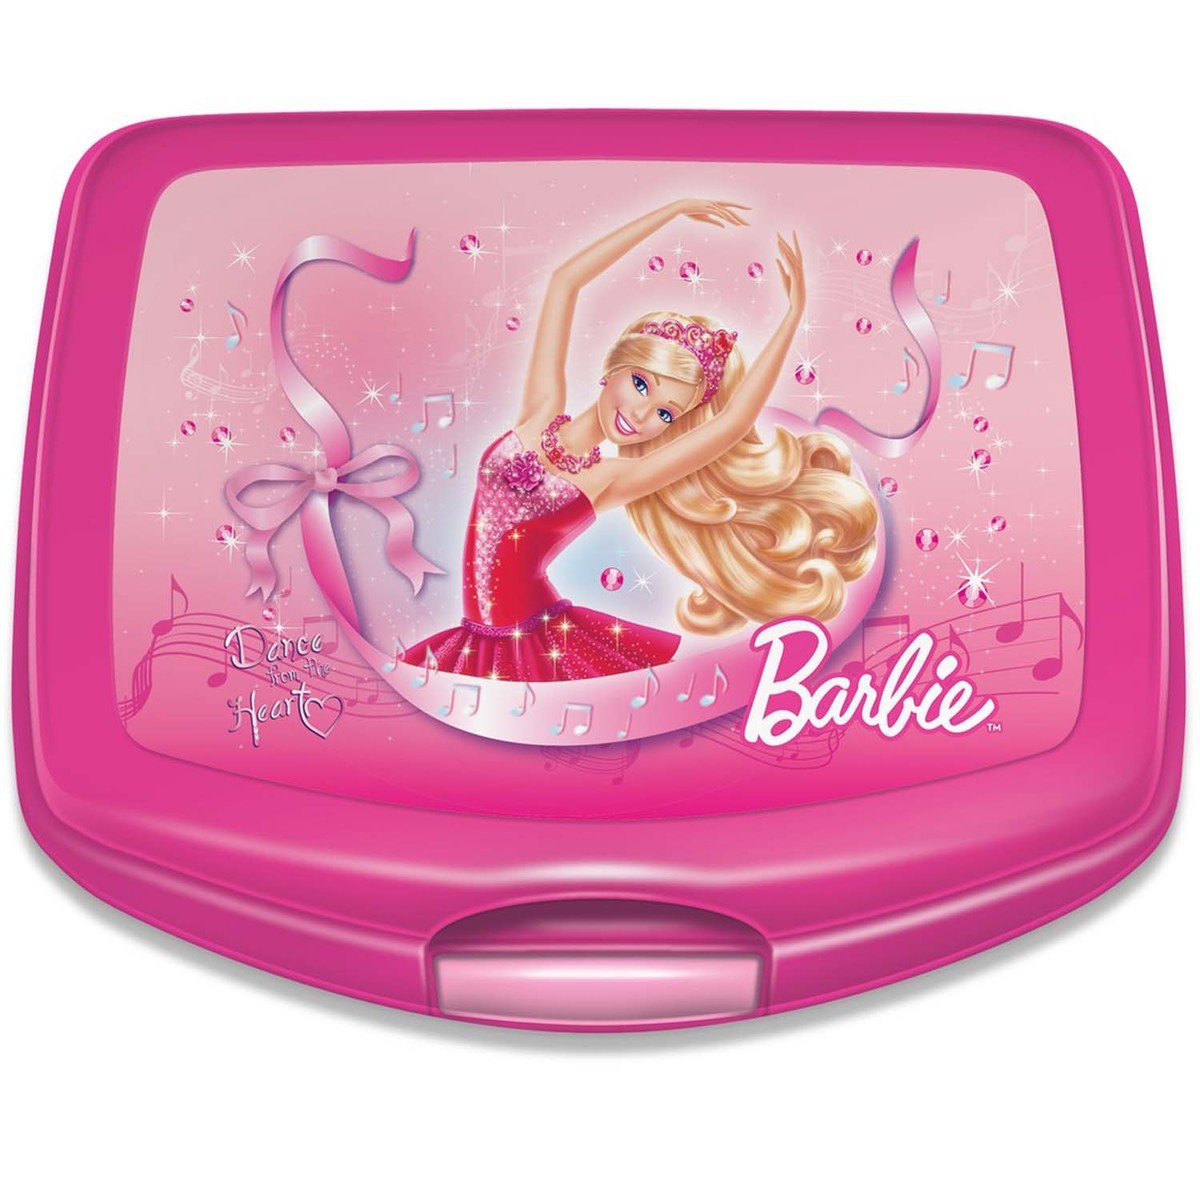 Barbie Lunch Box 112-30-402